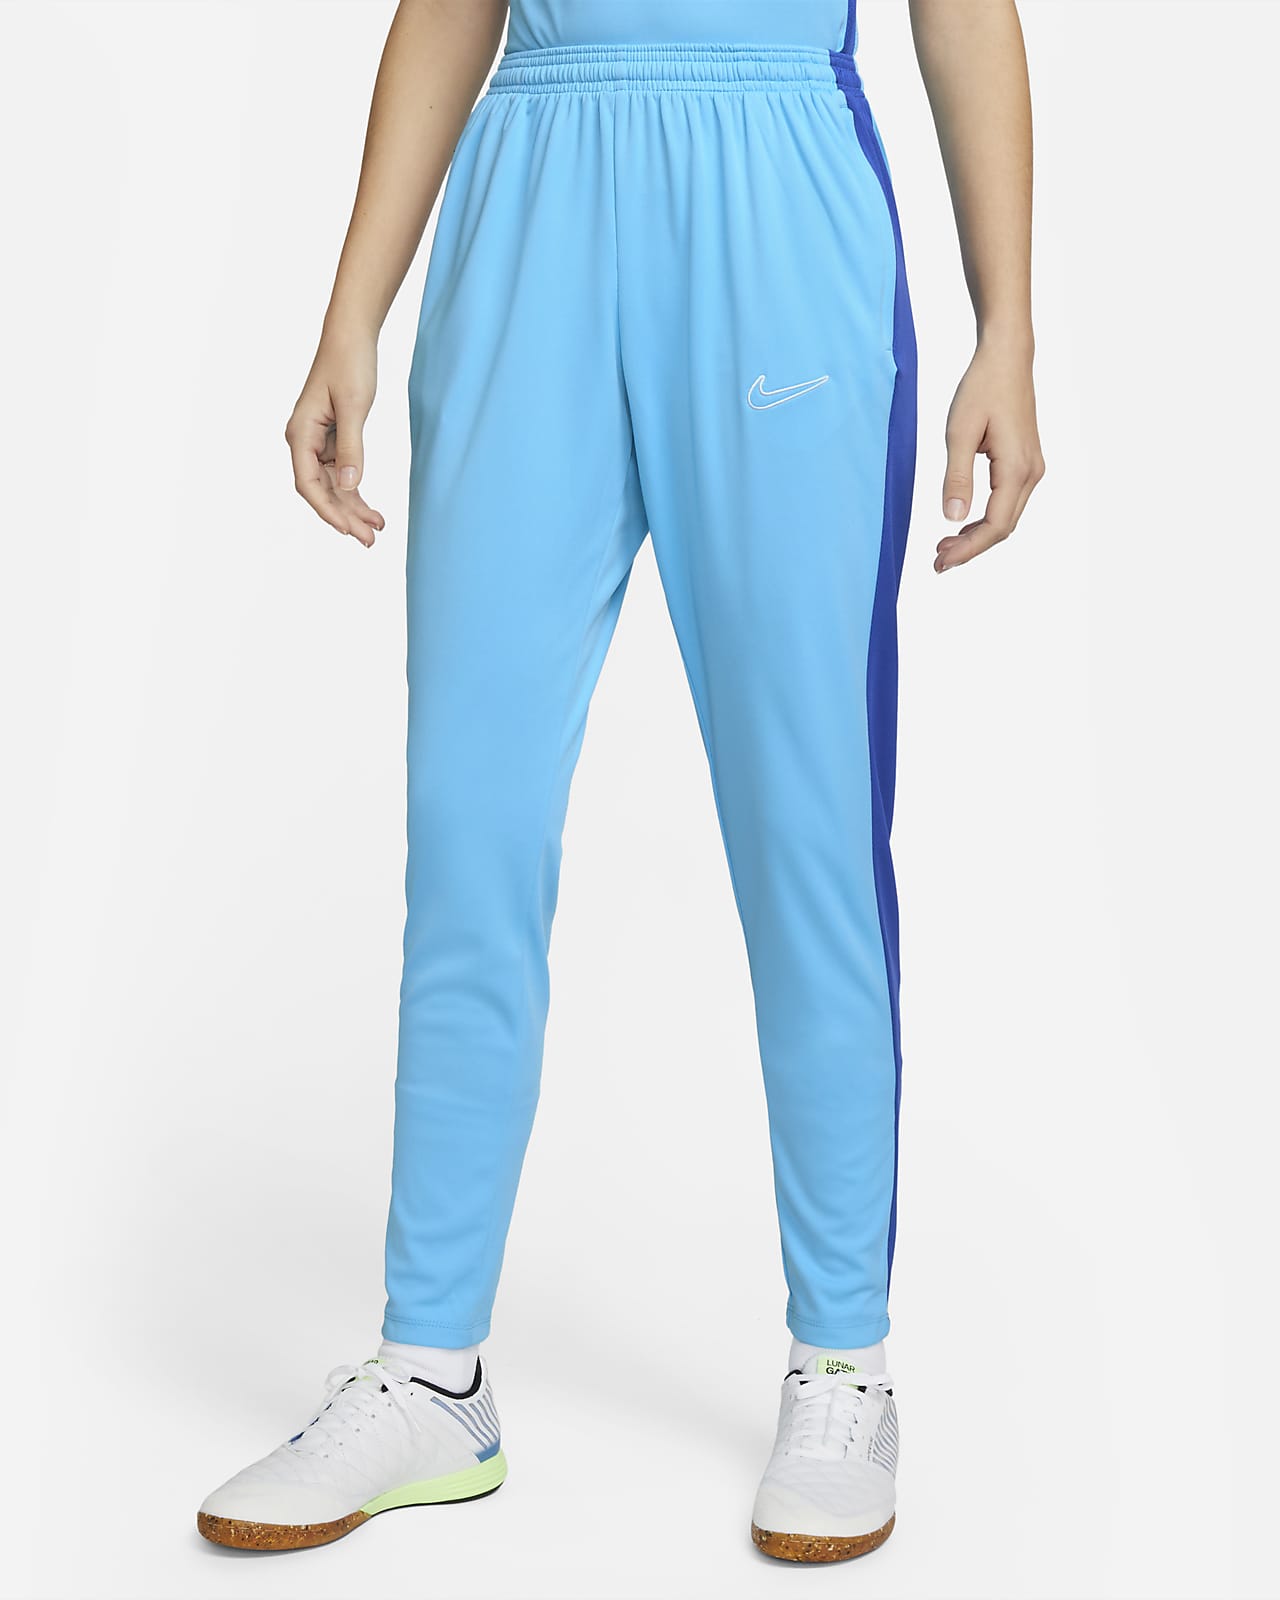 Nike Men's Yoga Pants - Clothing | Stylicy India